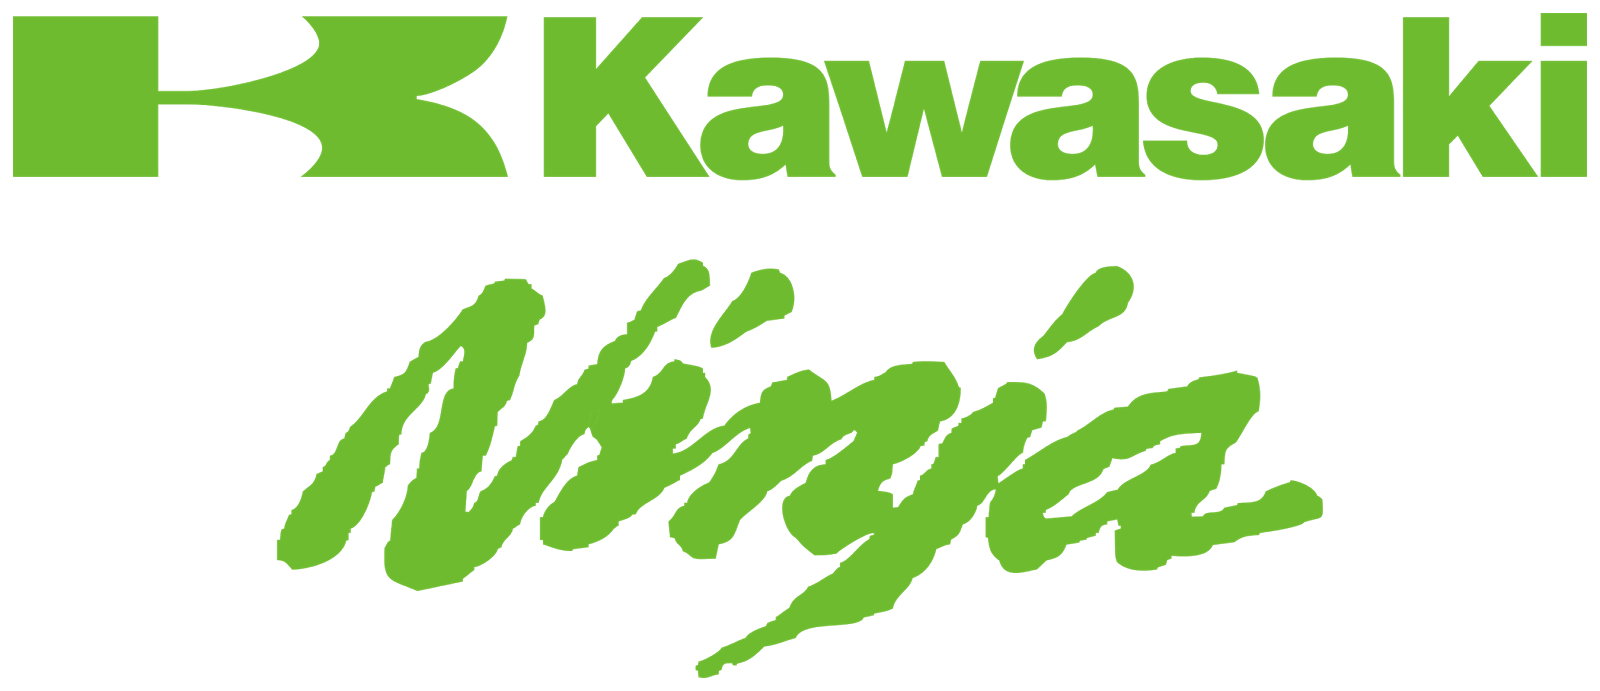 Kawasaki ninja Logos